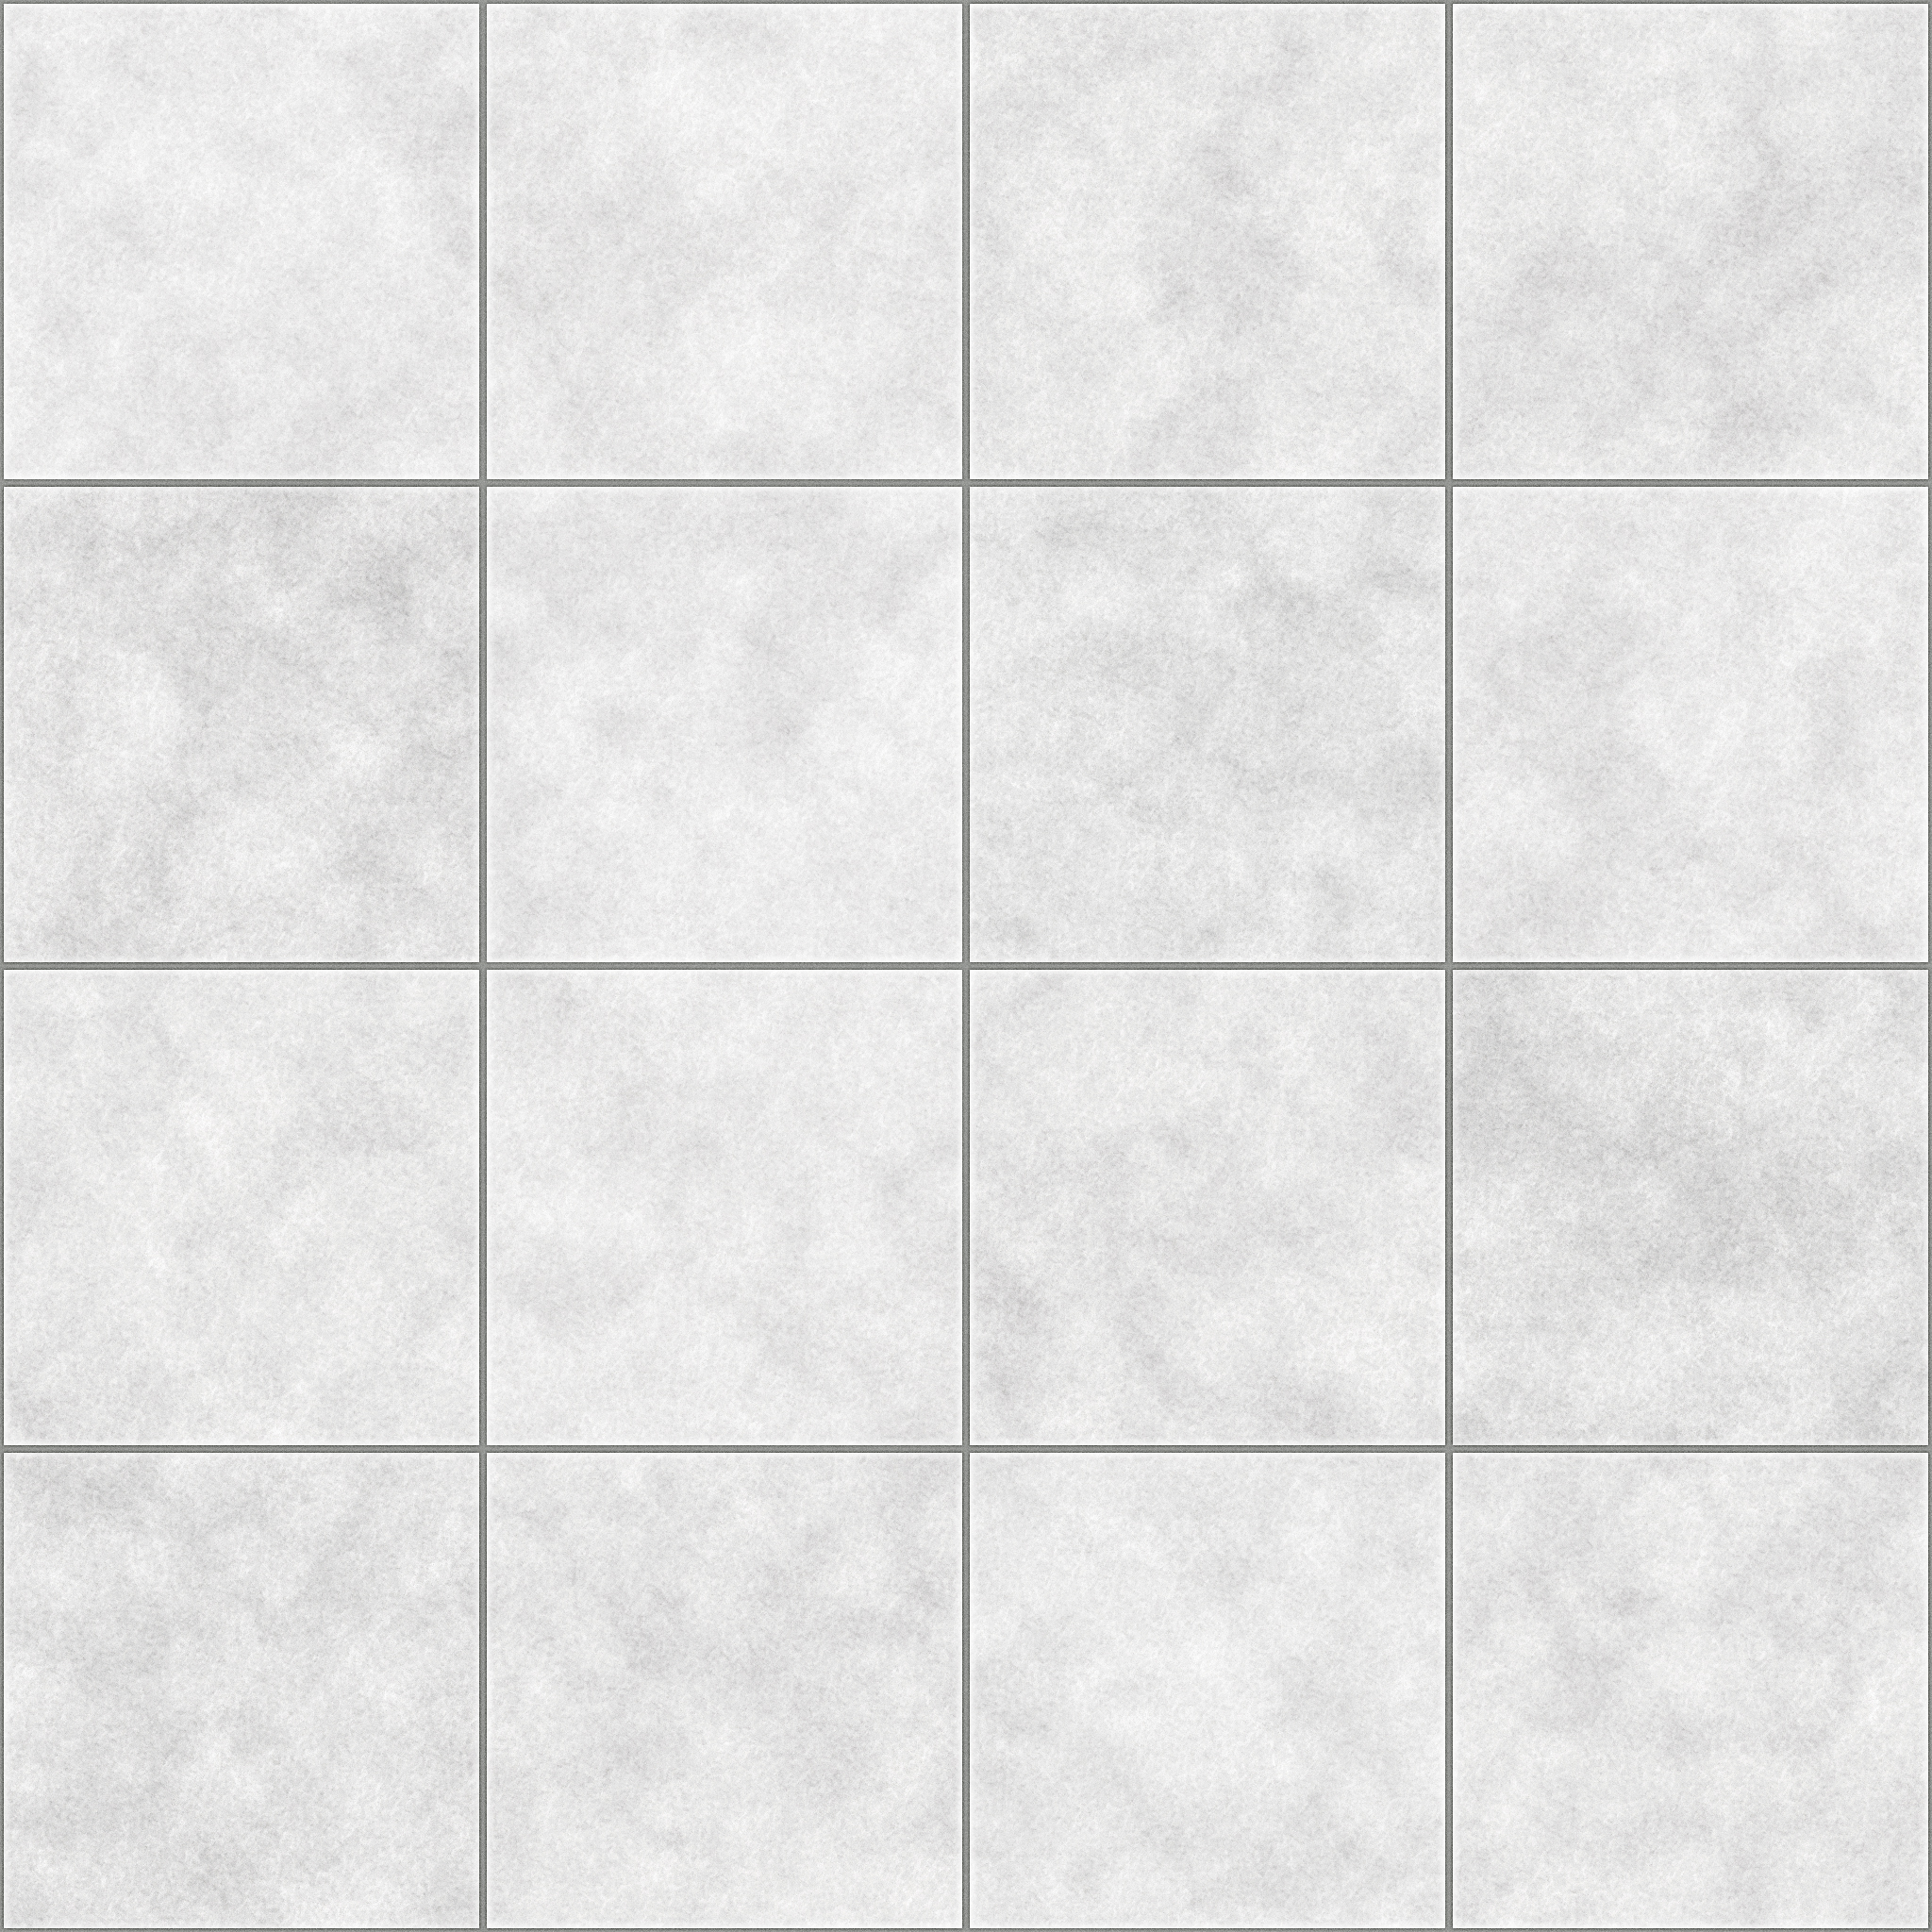 Marble Floor Tiles Texture [Tileable | 2048x2048] by FabooGuy on DeviantArt